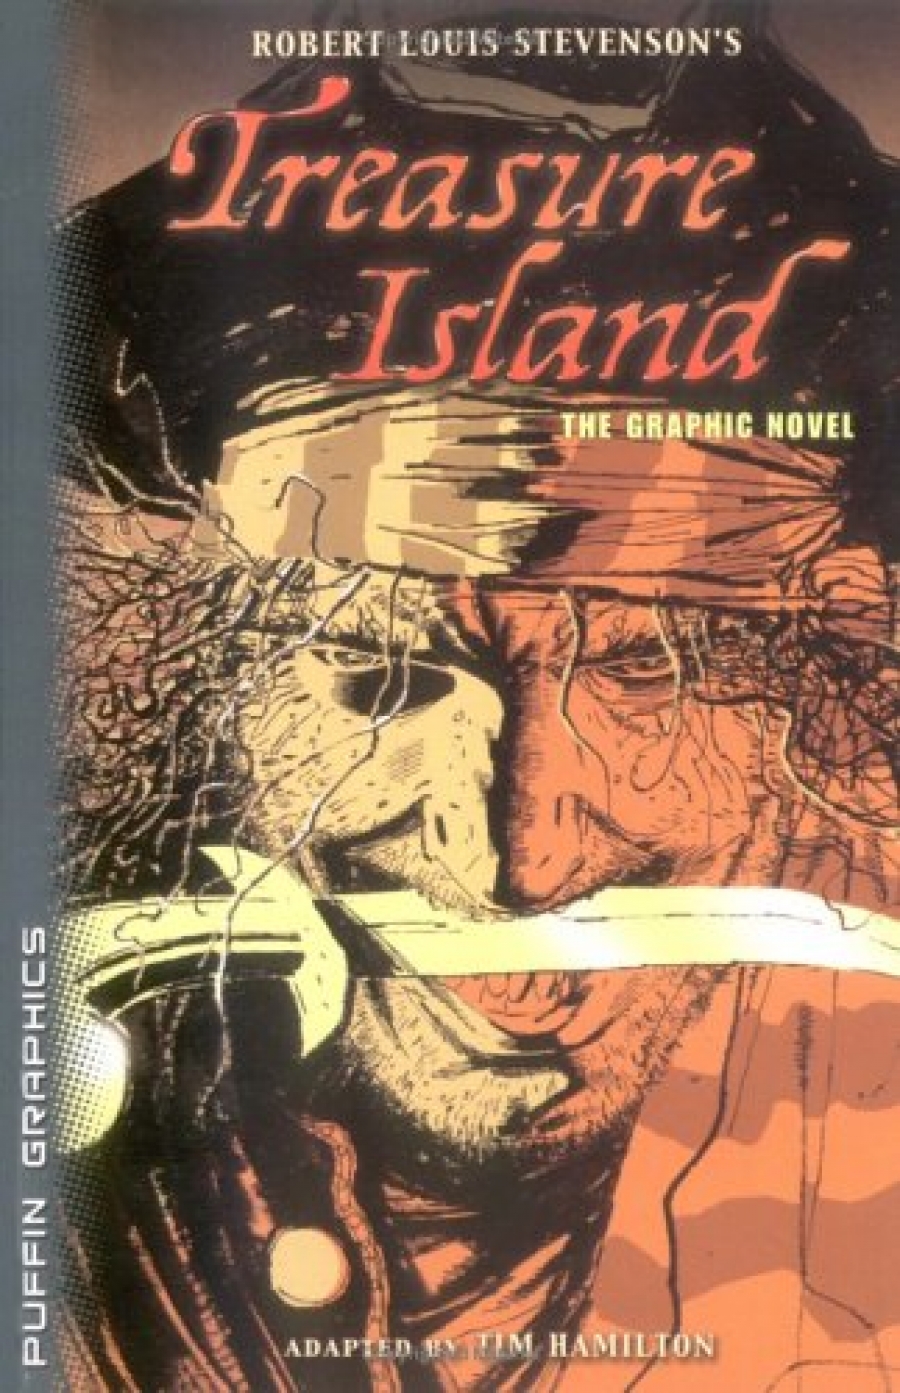 Robert L.S. Treasure Island: The Graphic Novel 